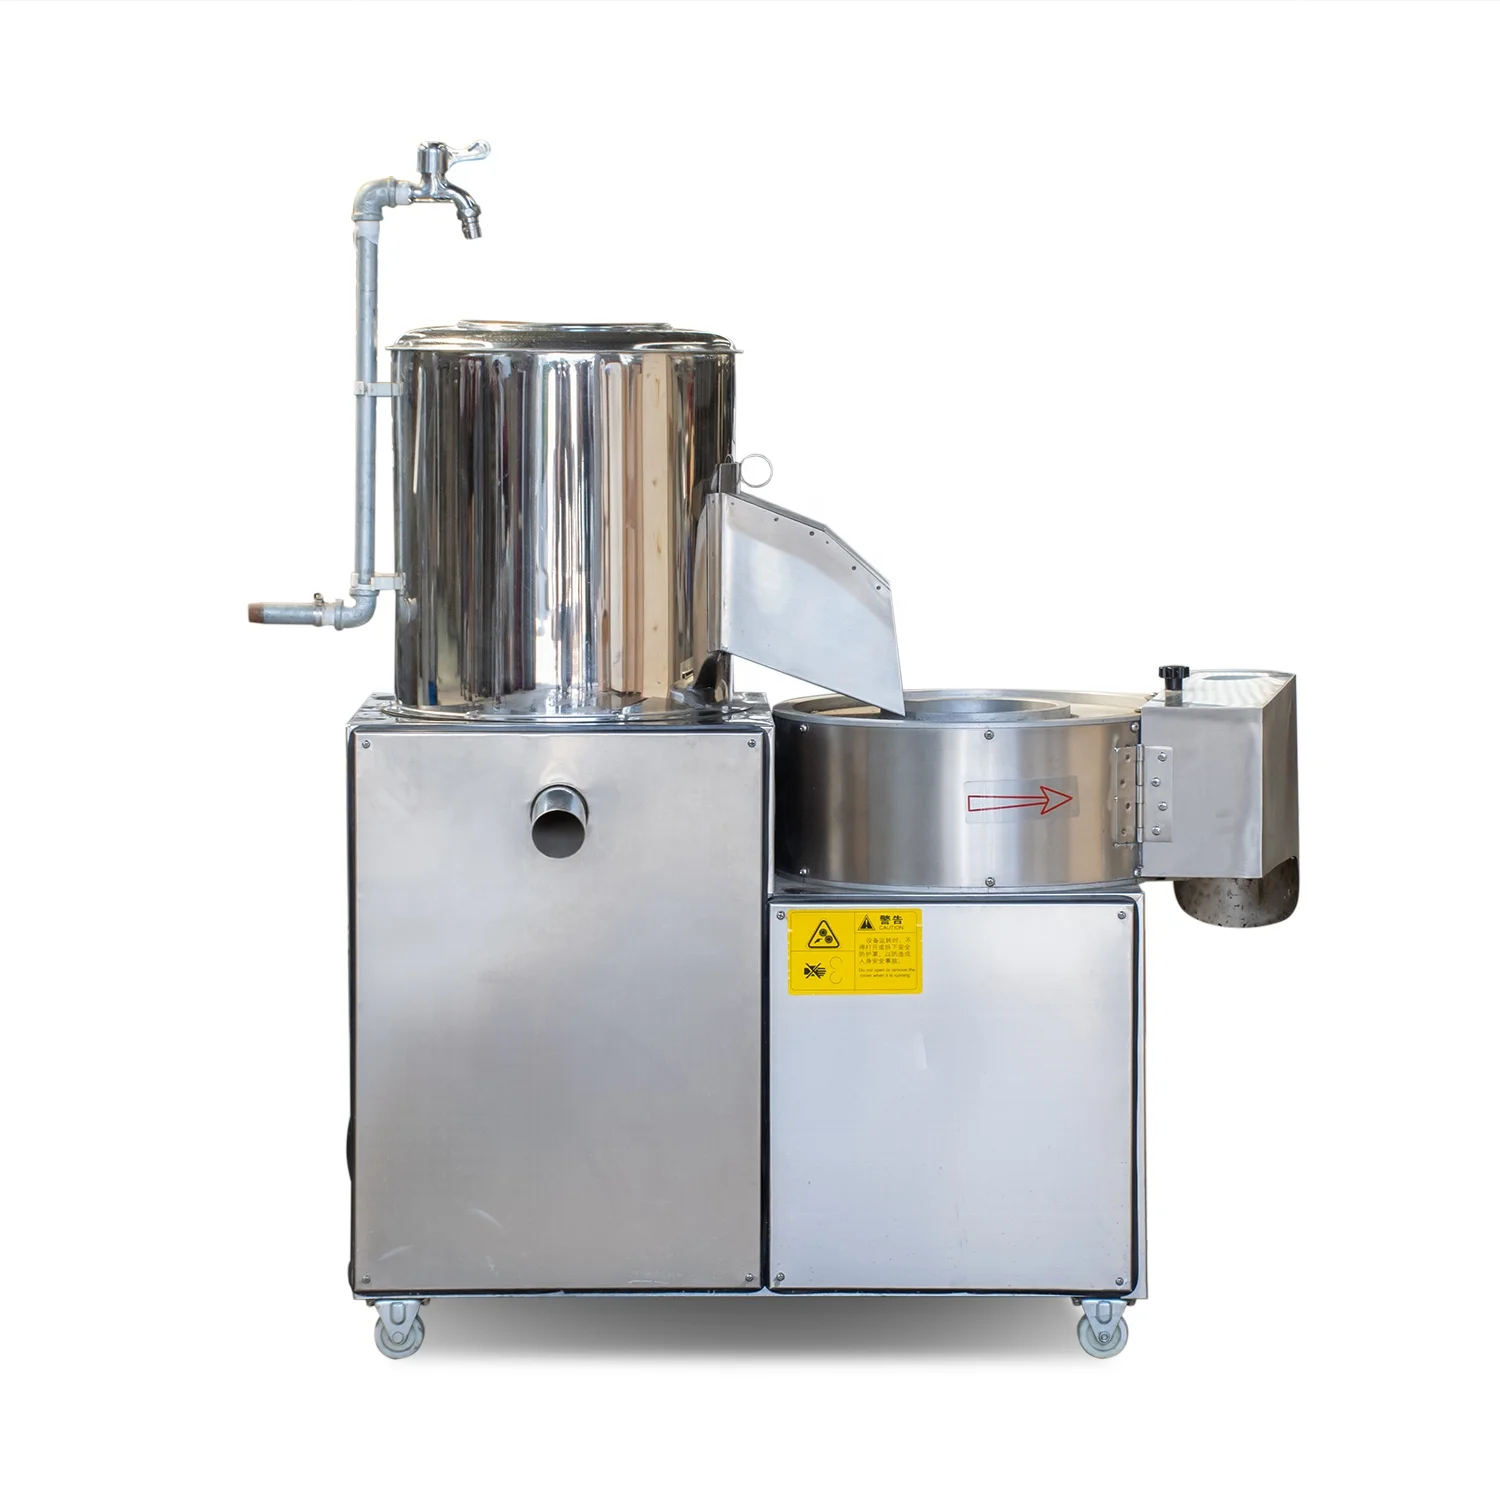 China Low Price Potato Slicer Machine Factory, Manufacturers, Suppliers -  Buy Potato Slicer Machine for Sale - Runxiang Machinery